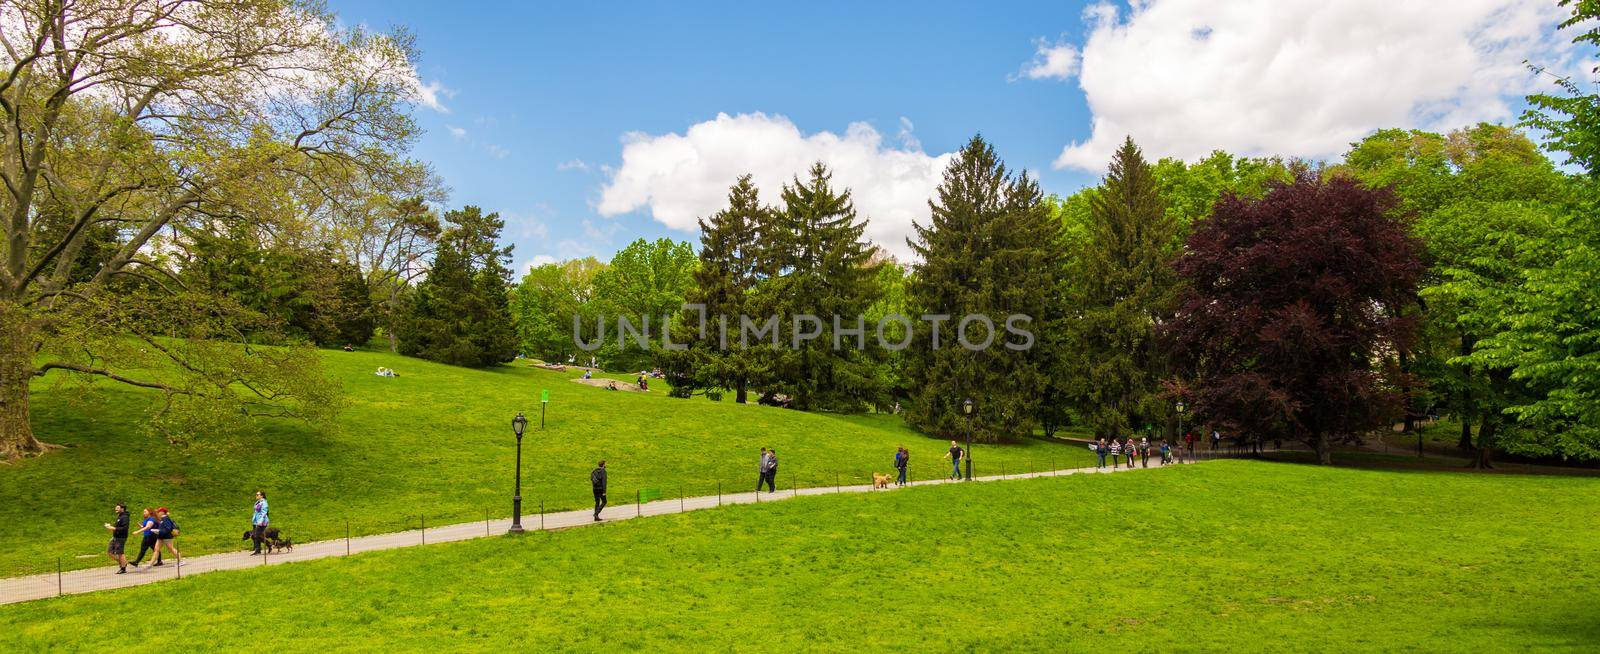 New York, USA - May 15, 2019: Central park at sunny day in Manhattan, New York City, USA by Mariakray